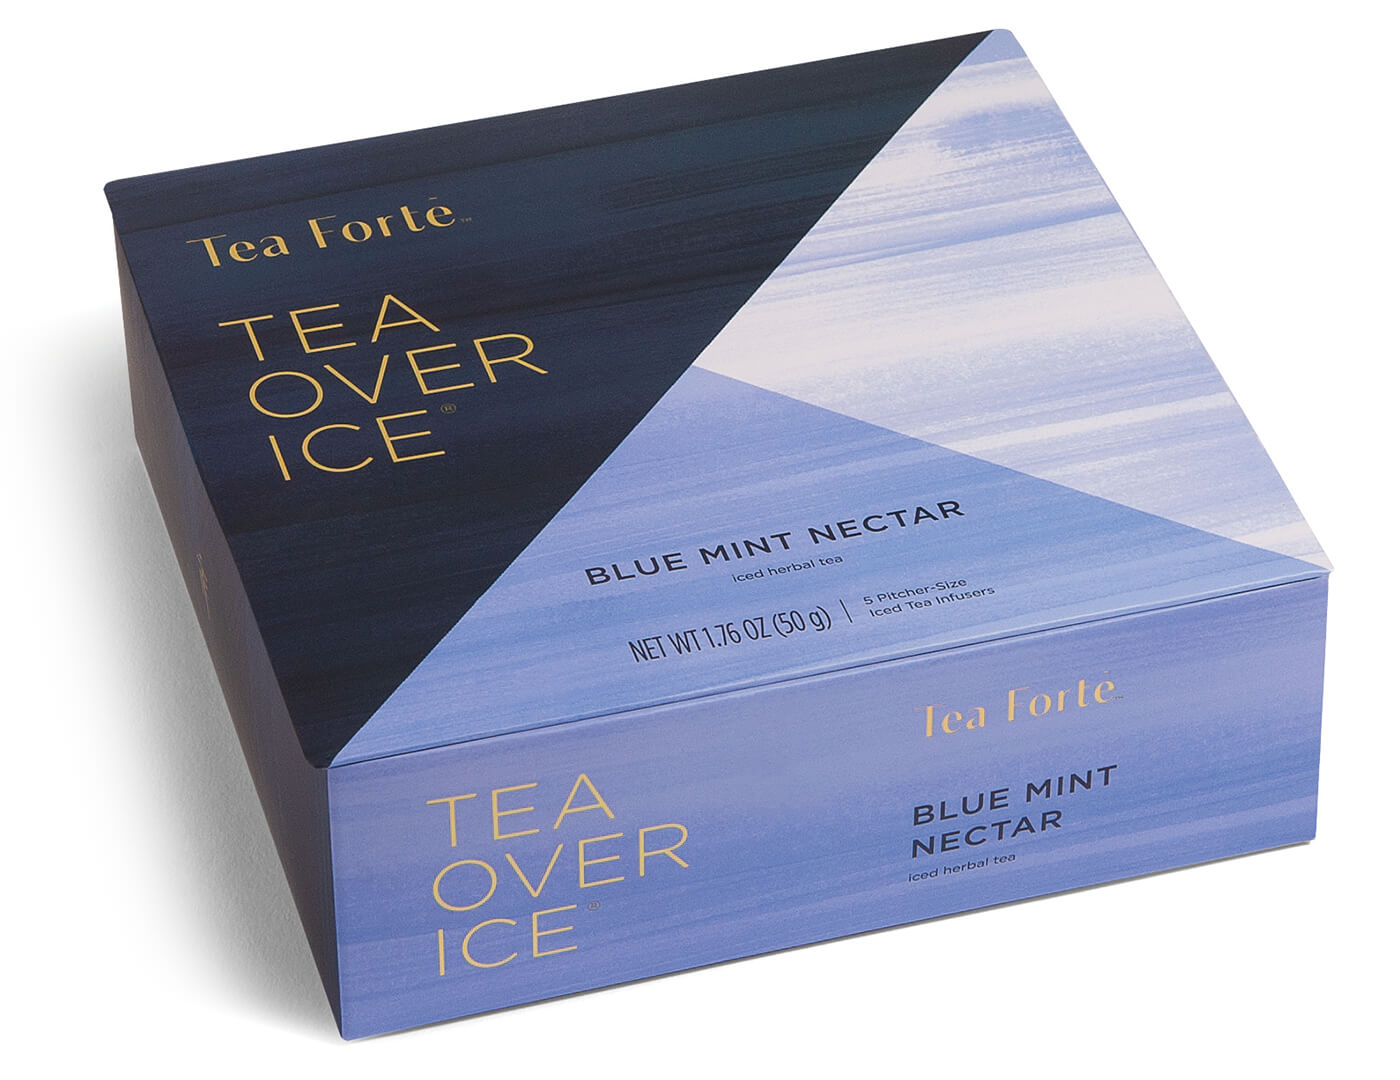 Tea Over Ice Blue Mint Nectar closed box